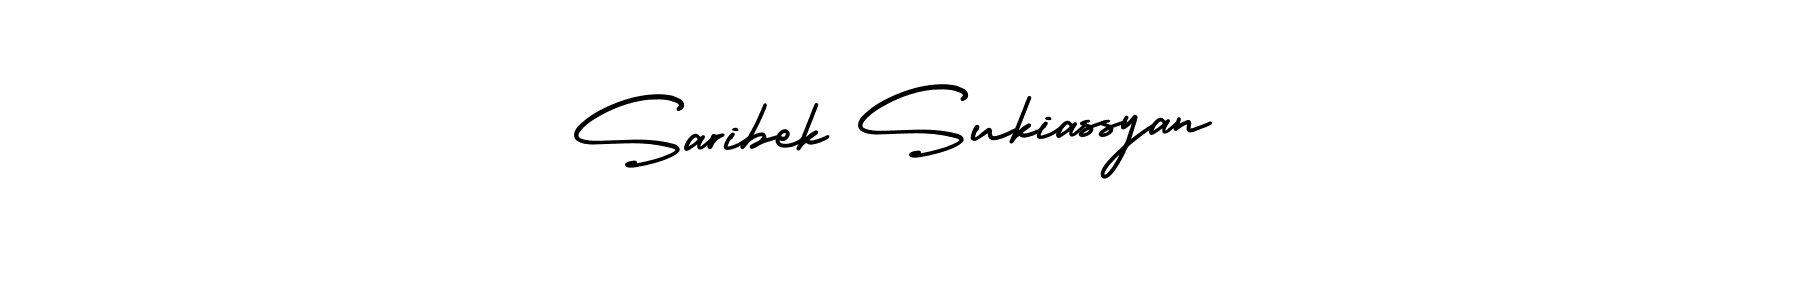 How to Draw Saribek Sukiassyan signature style? AmerikaSignatureDemo-Regular is a latest design signature styles for name Saribek Sukiassyan. Saribek Sukiassyan signature style 3 images and pictures png